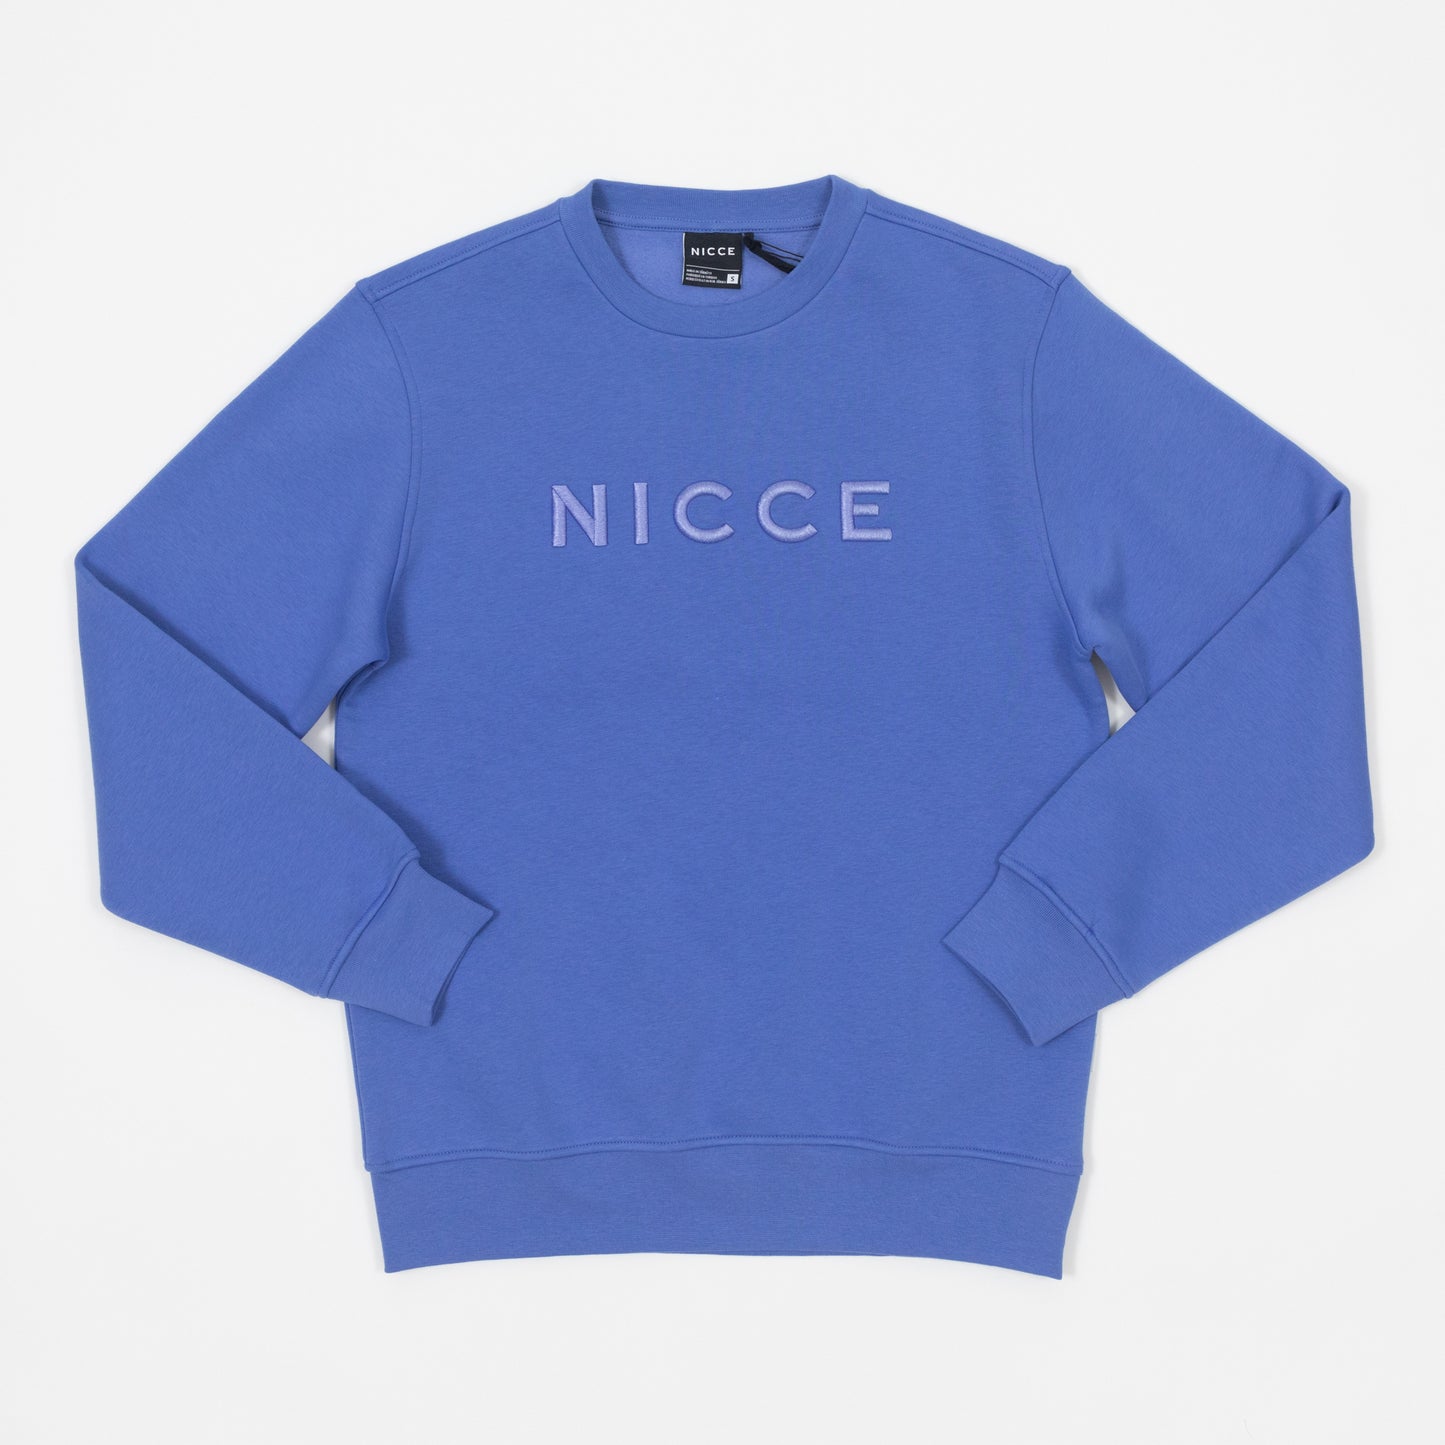 NICCE Mercury Logo Sweatshirt in IRIS BLUE